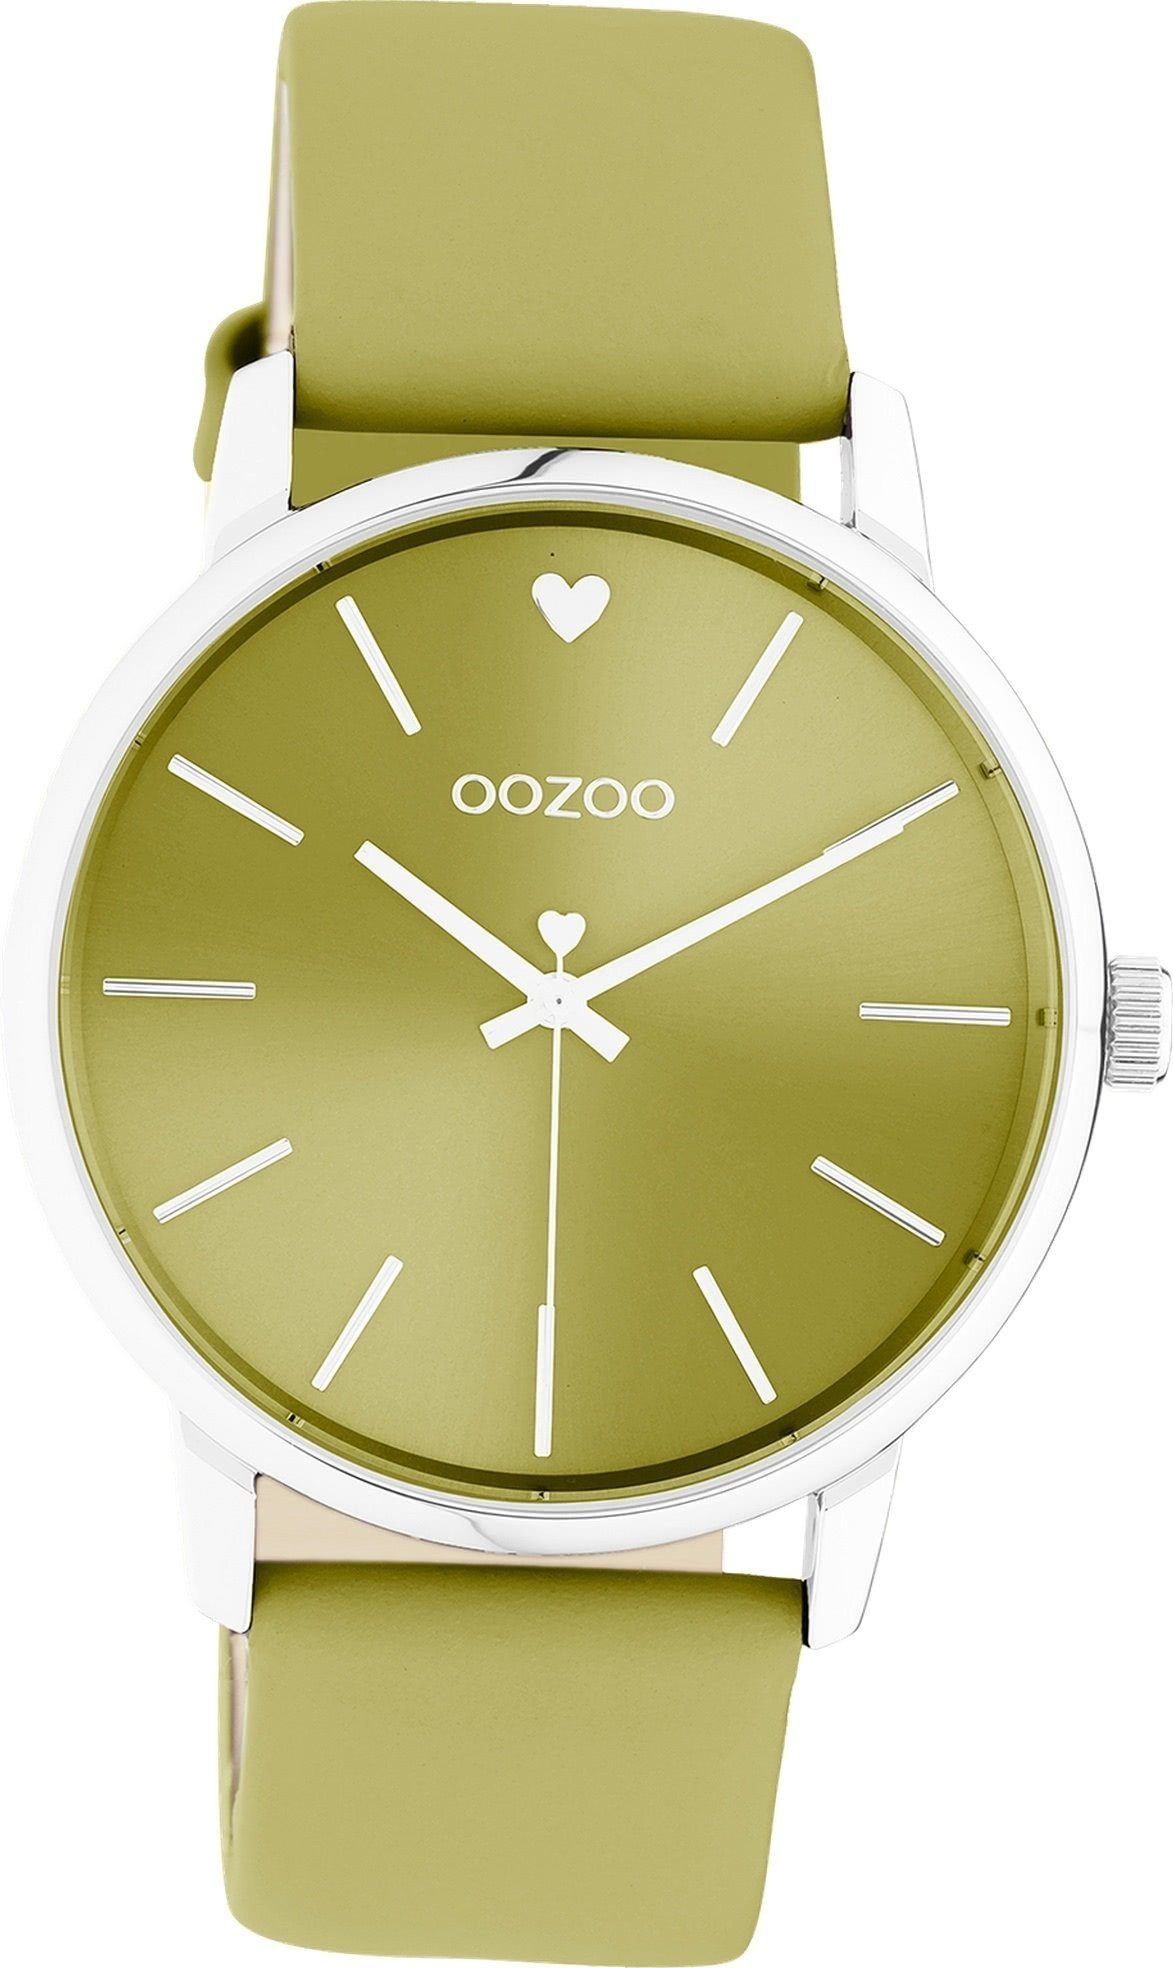 OOZOO Quarzuhr Oozoo Lederarmband rundes ockergelb, groß (ca. 40mm) Gehäuse, Damen Armbanduhr Timepieces, Damenuhr